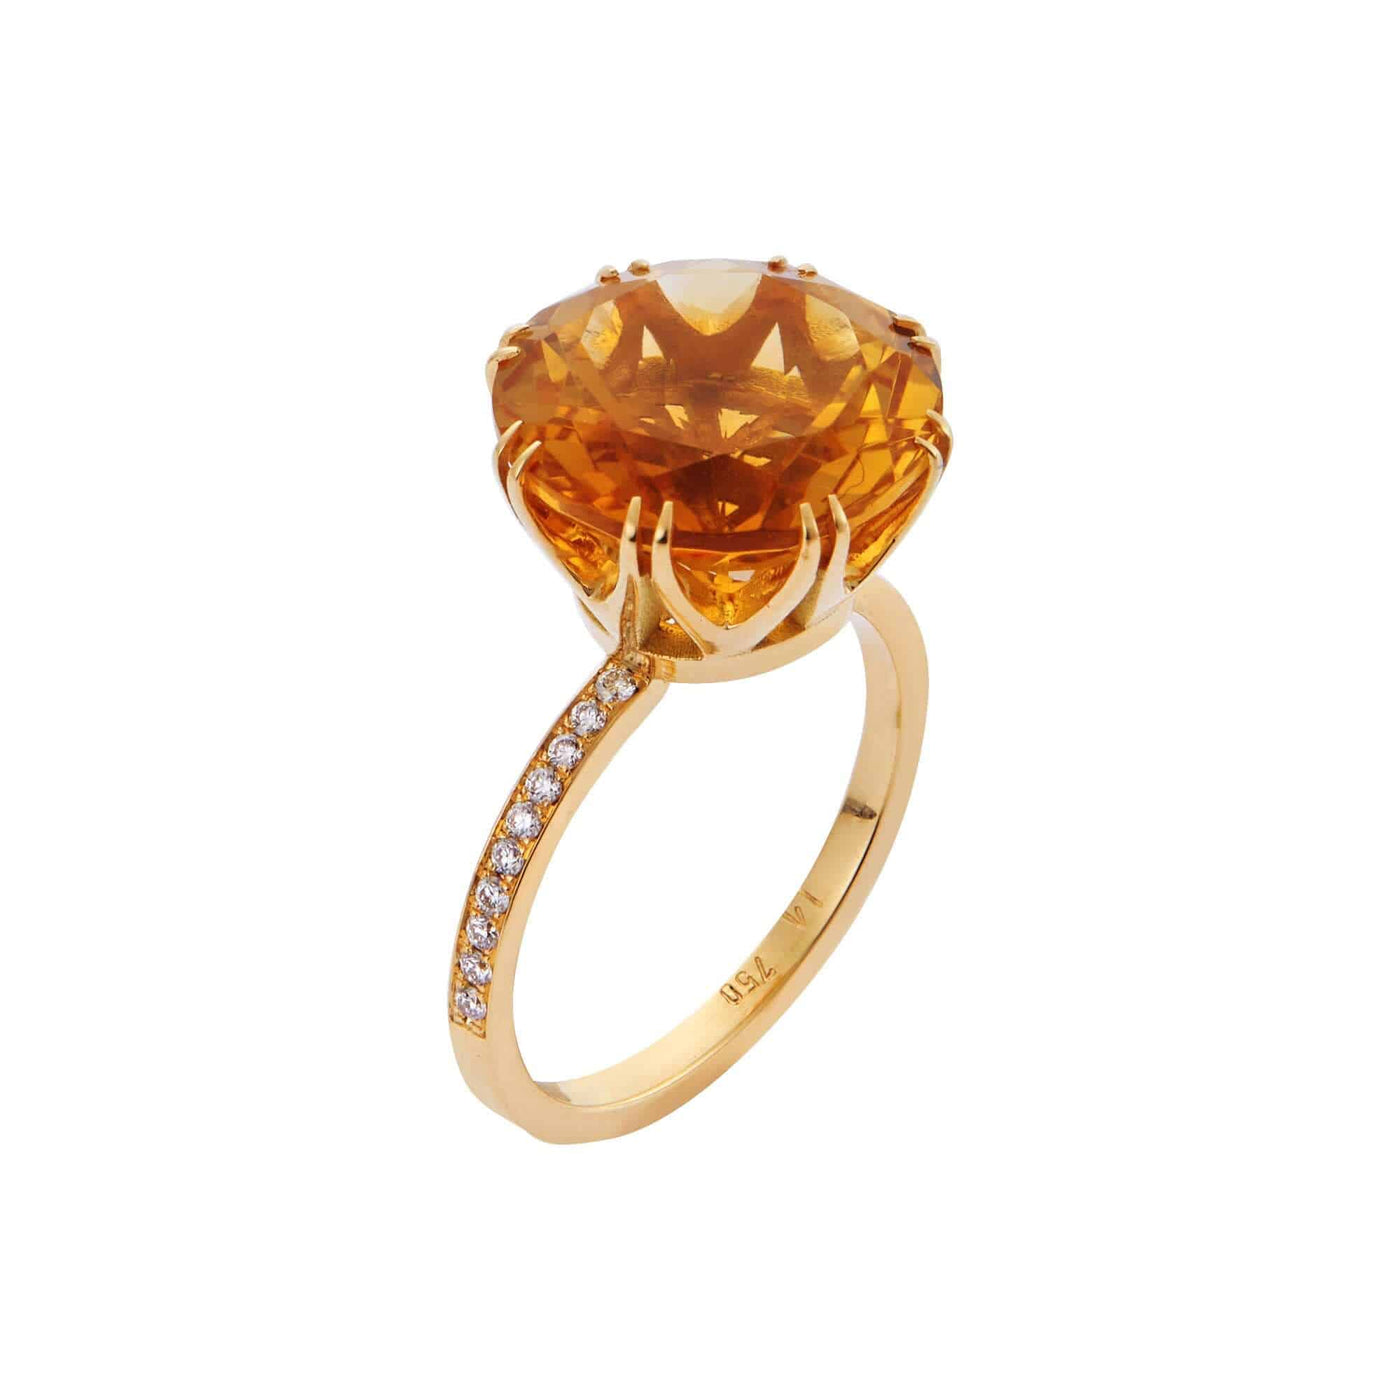 Solitaire Crown Ring Citrine - Crown - Ileana Makri store